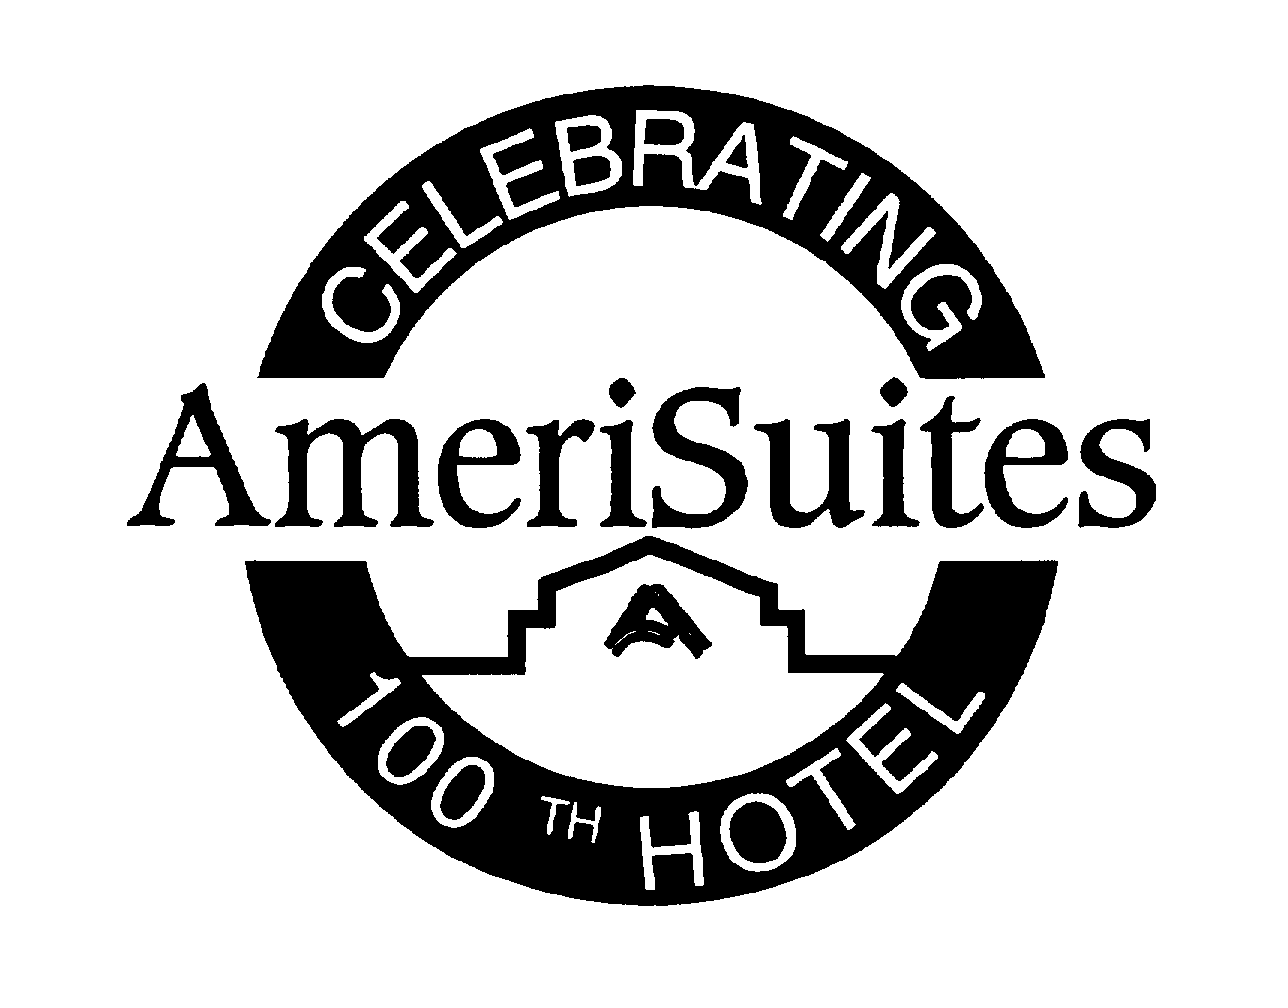  CELEBRATING AMERISUITES 100TH HOTEL